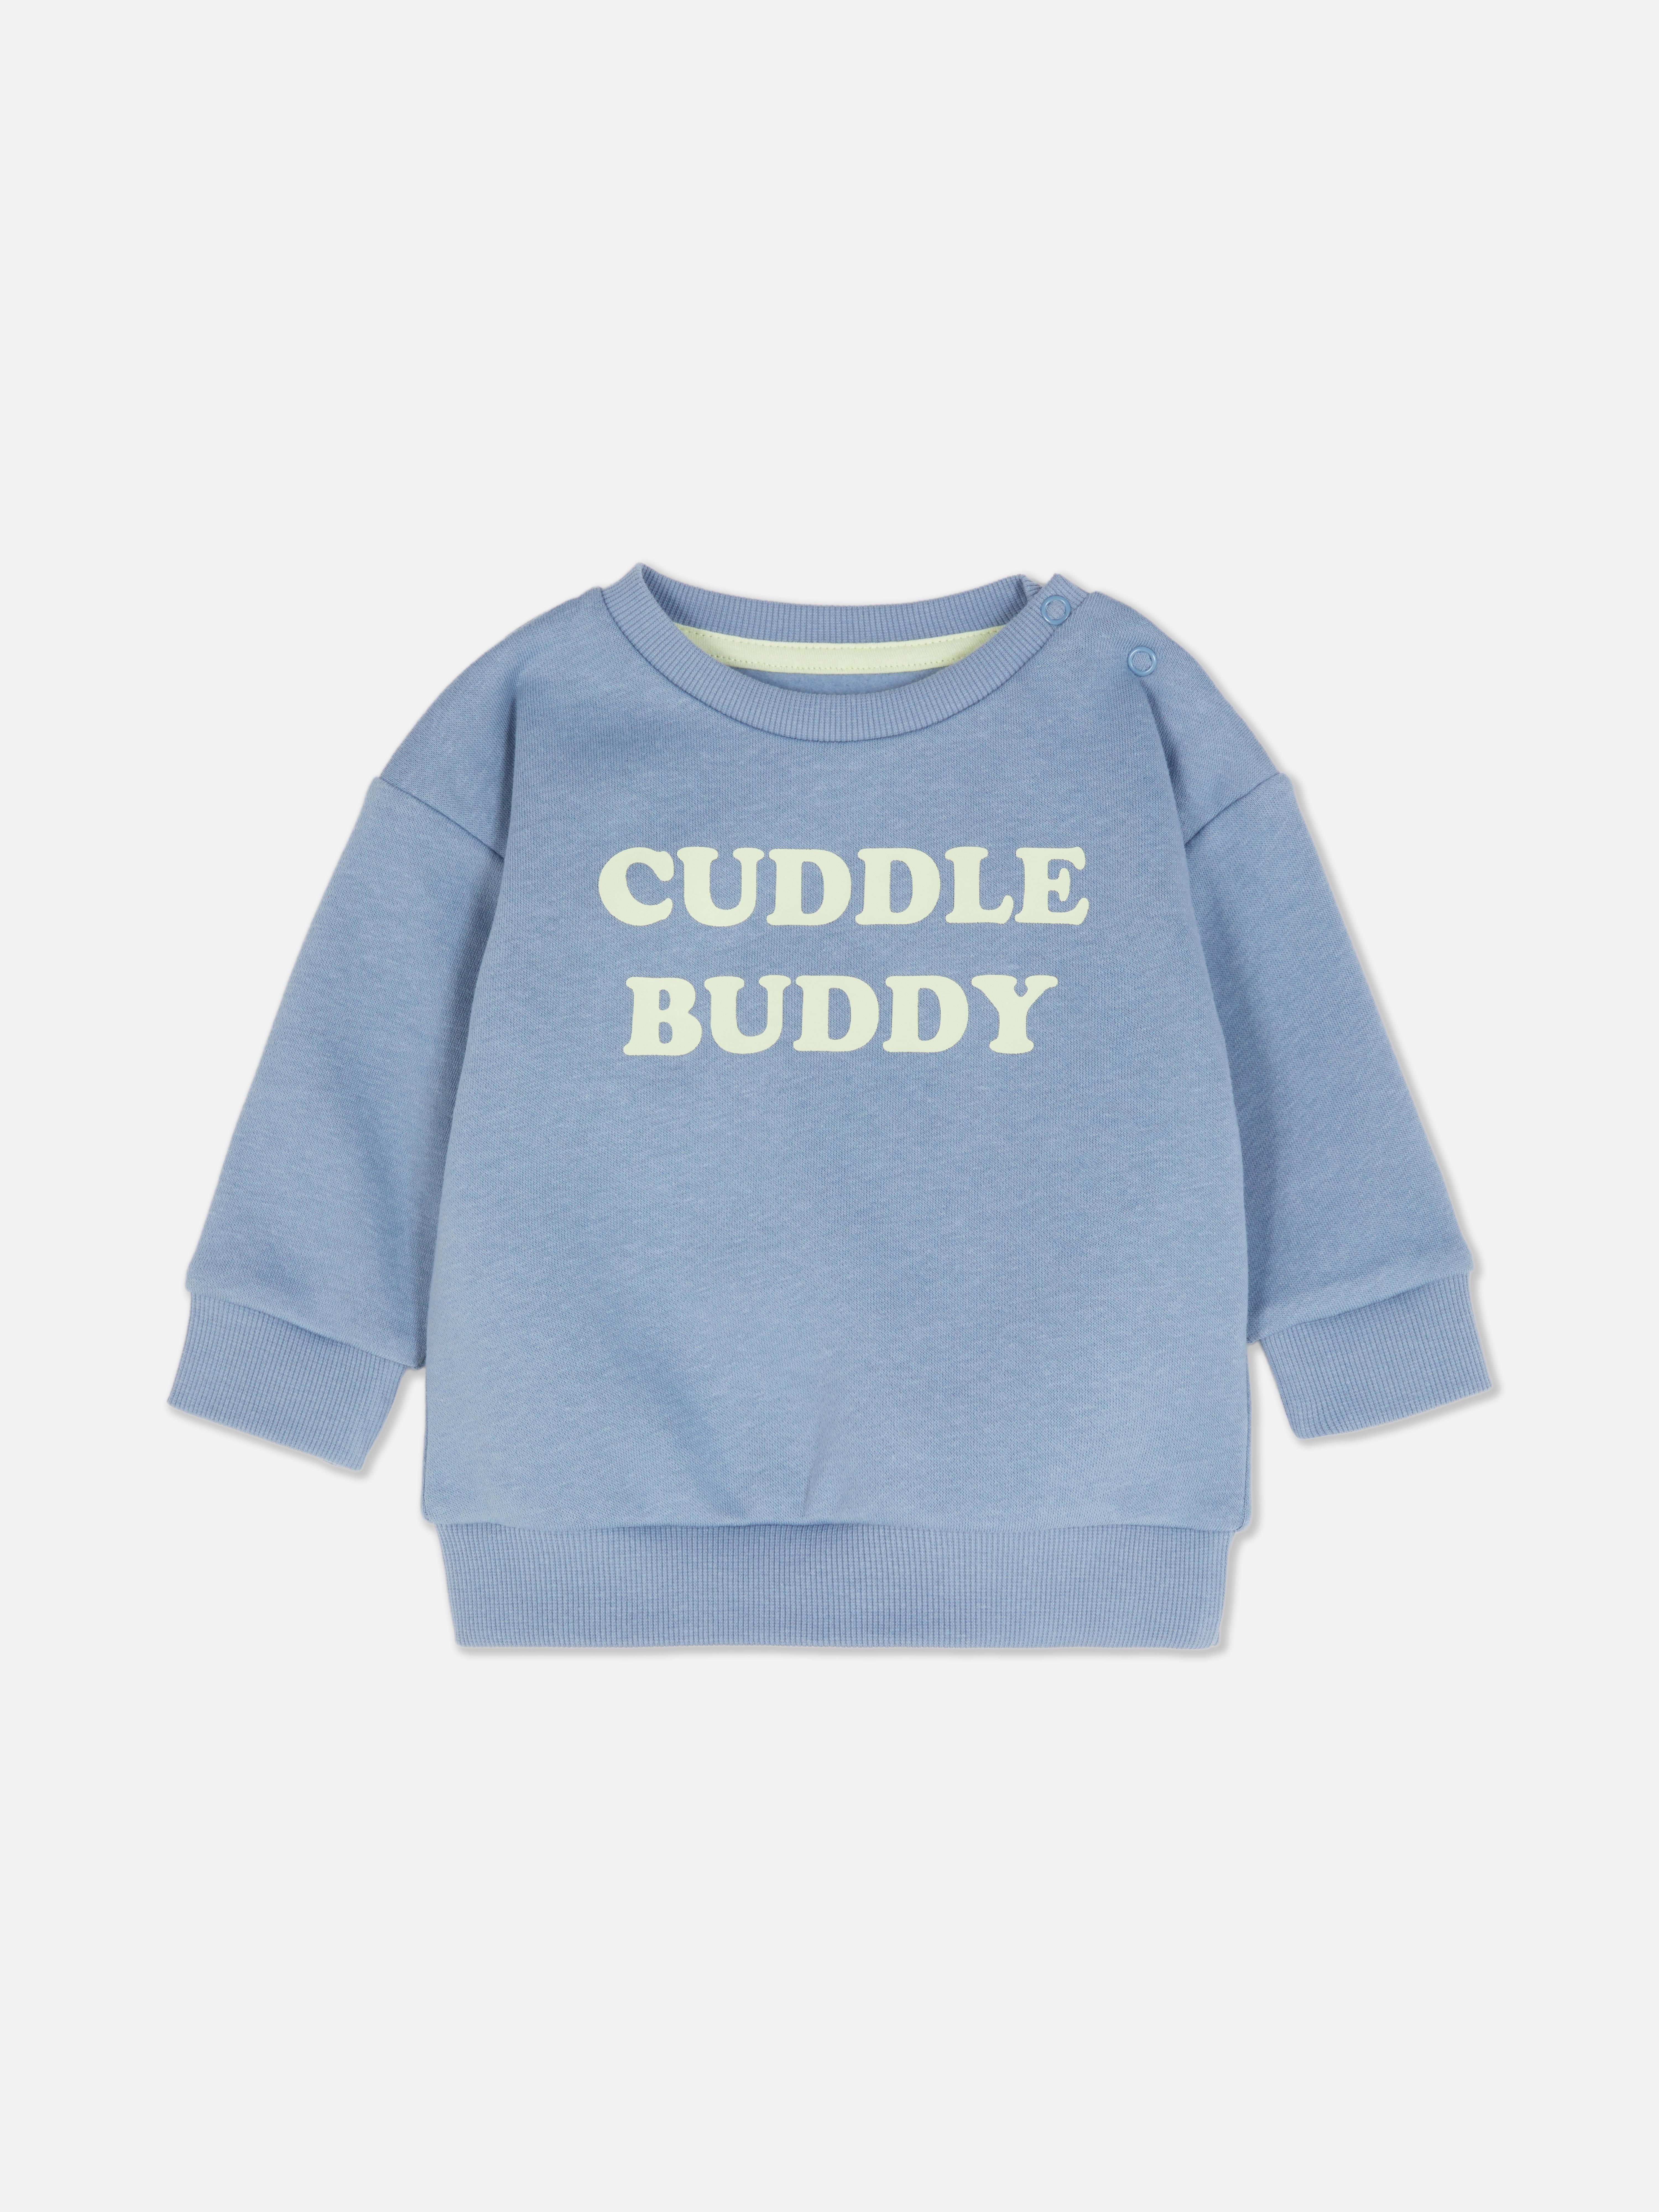 Cuddle Buddy Crew Neck Sweatshirt